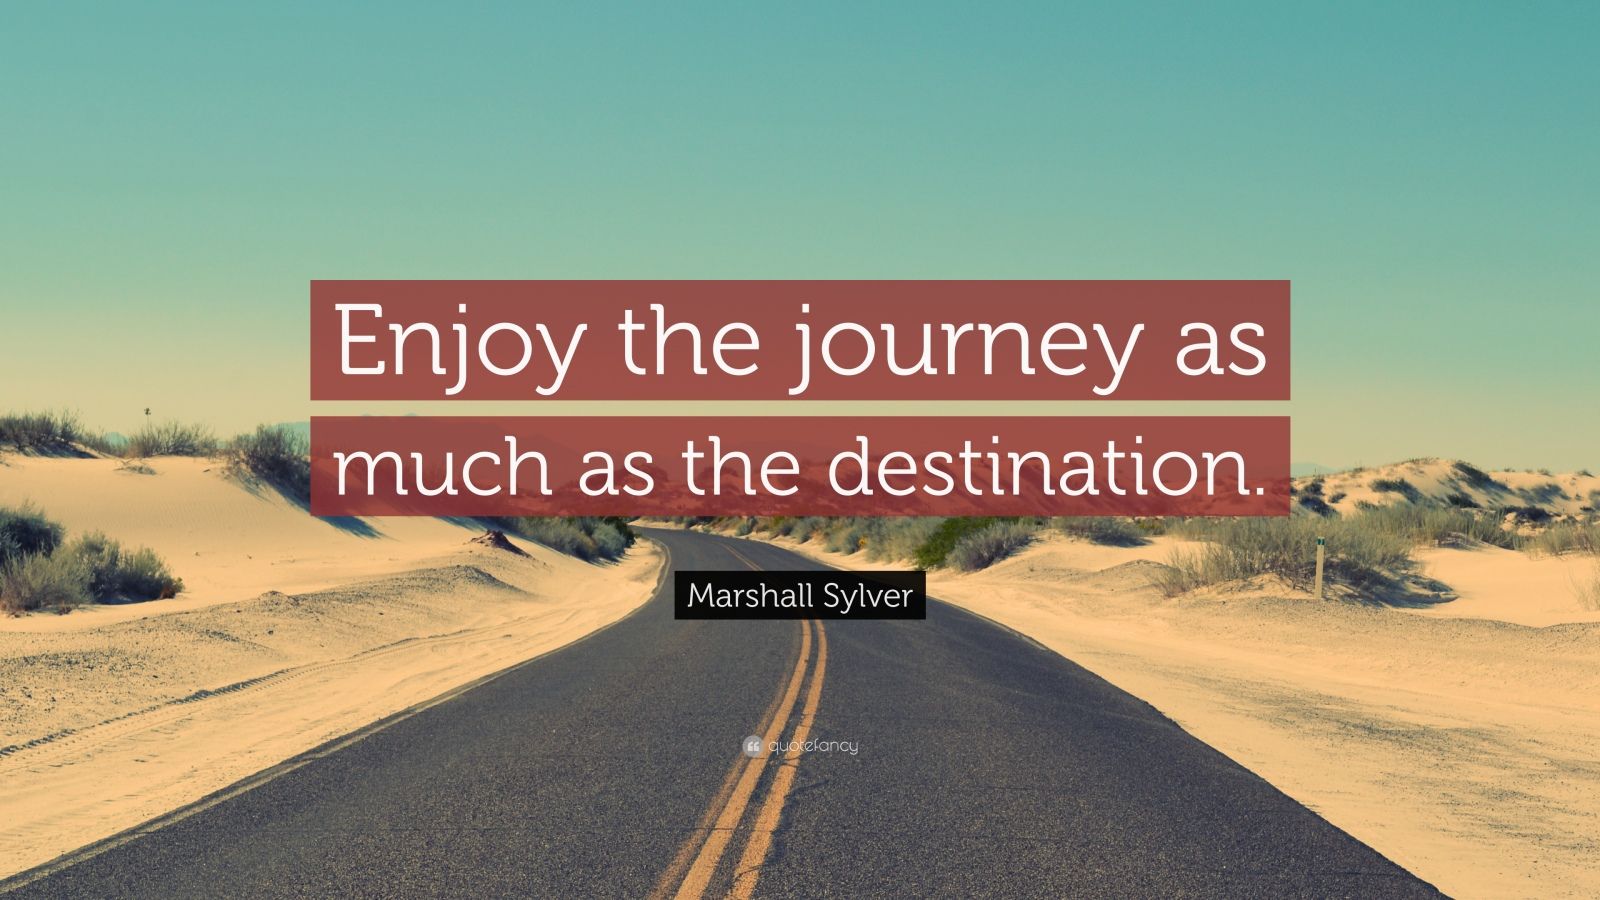 journey better than destination quotes